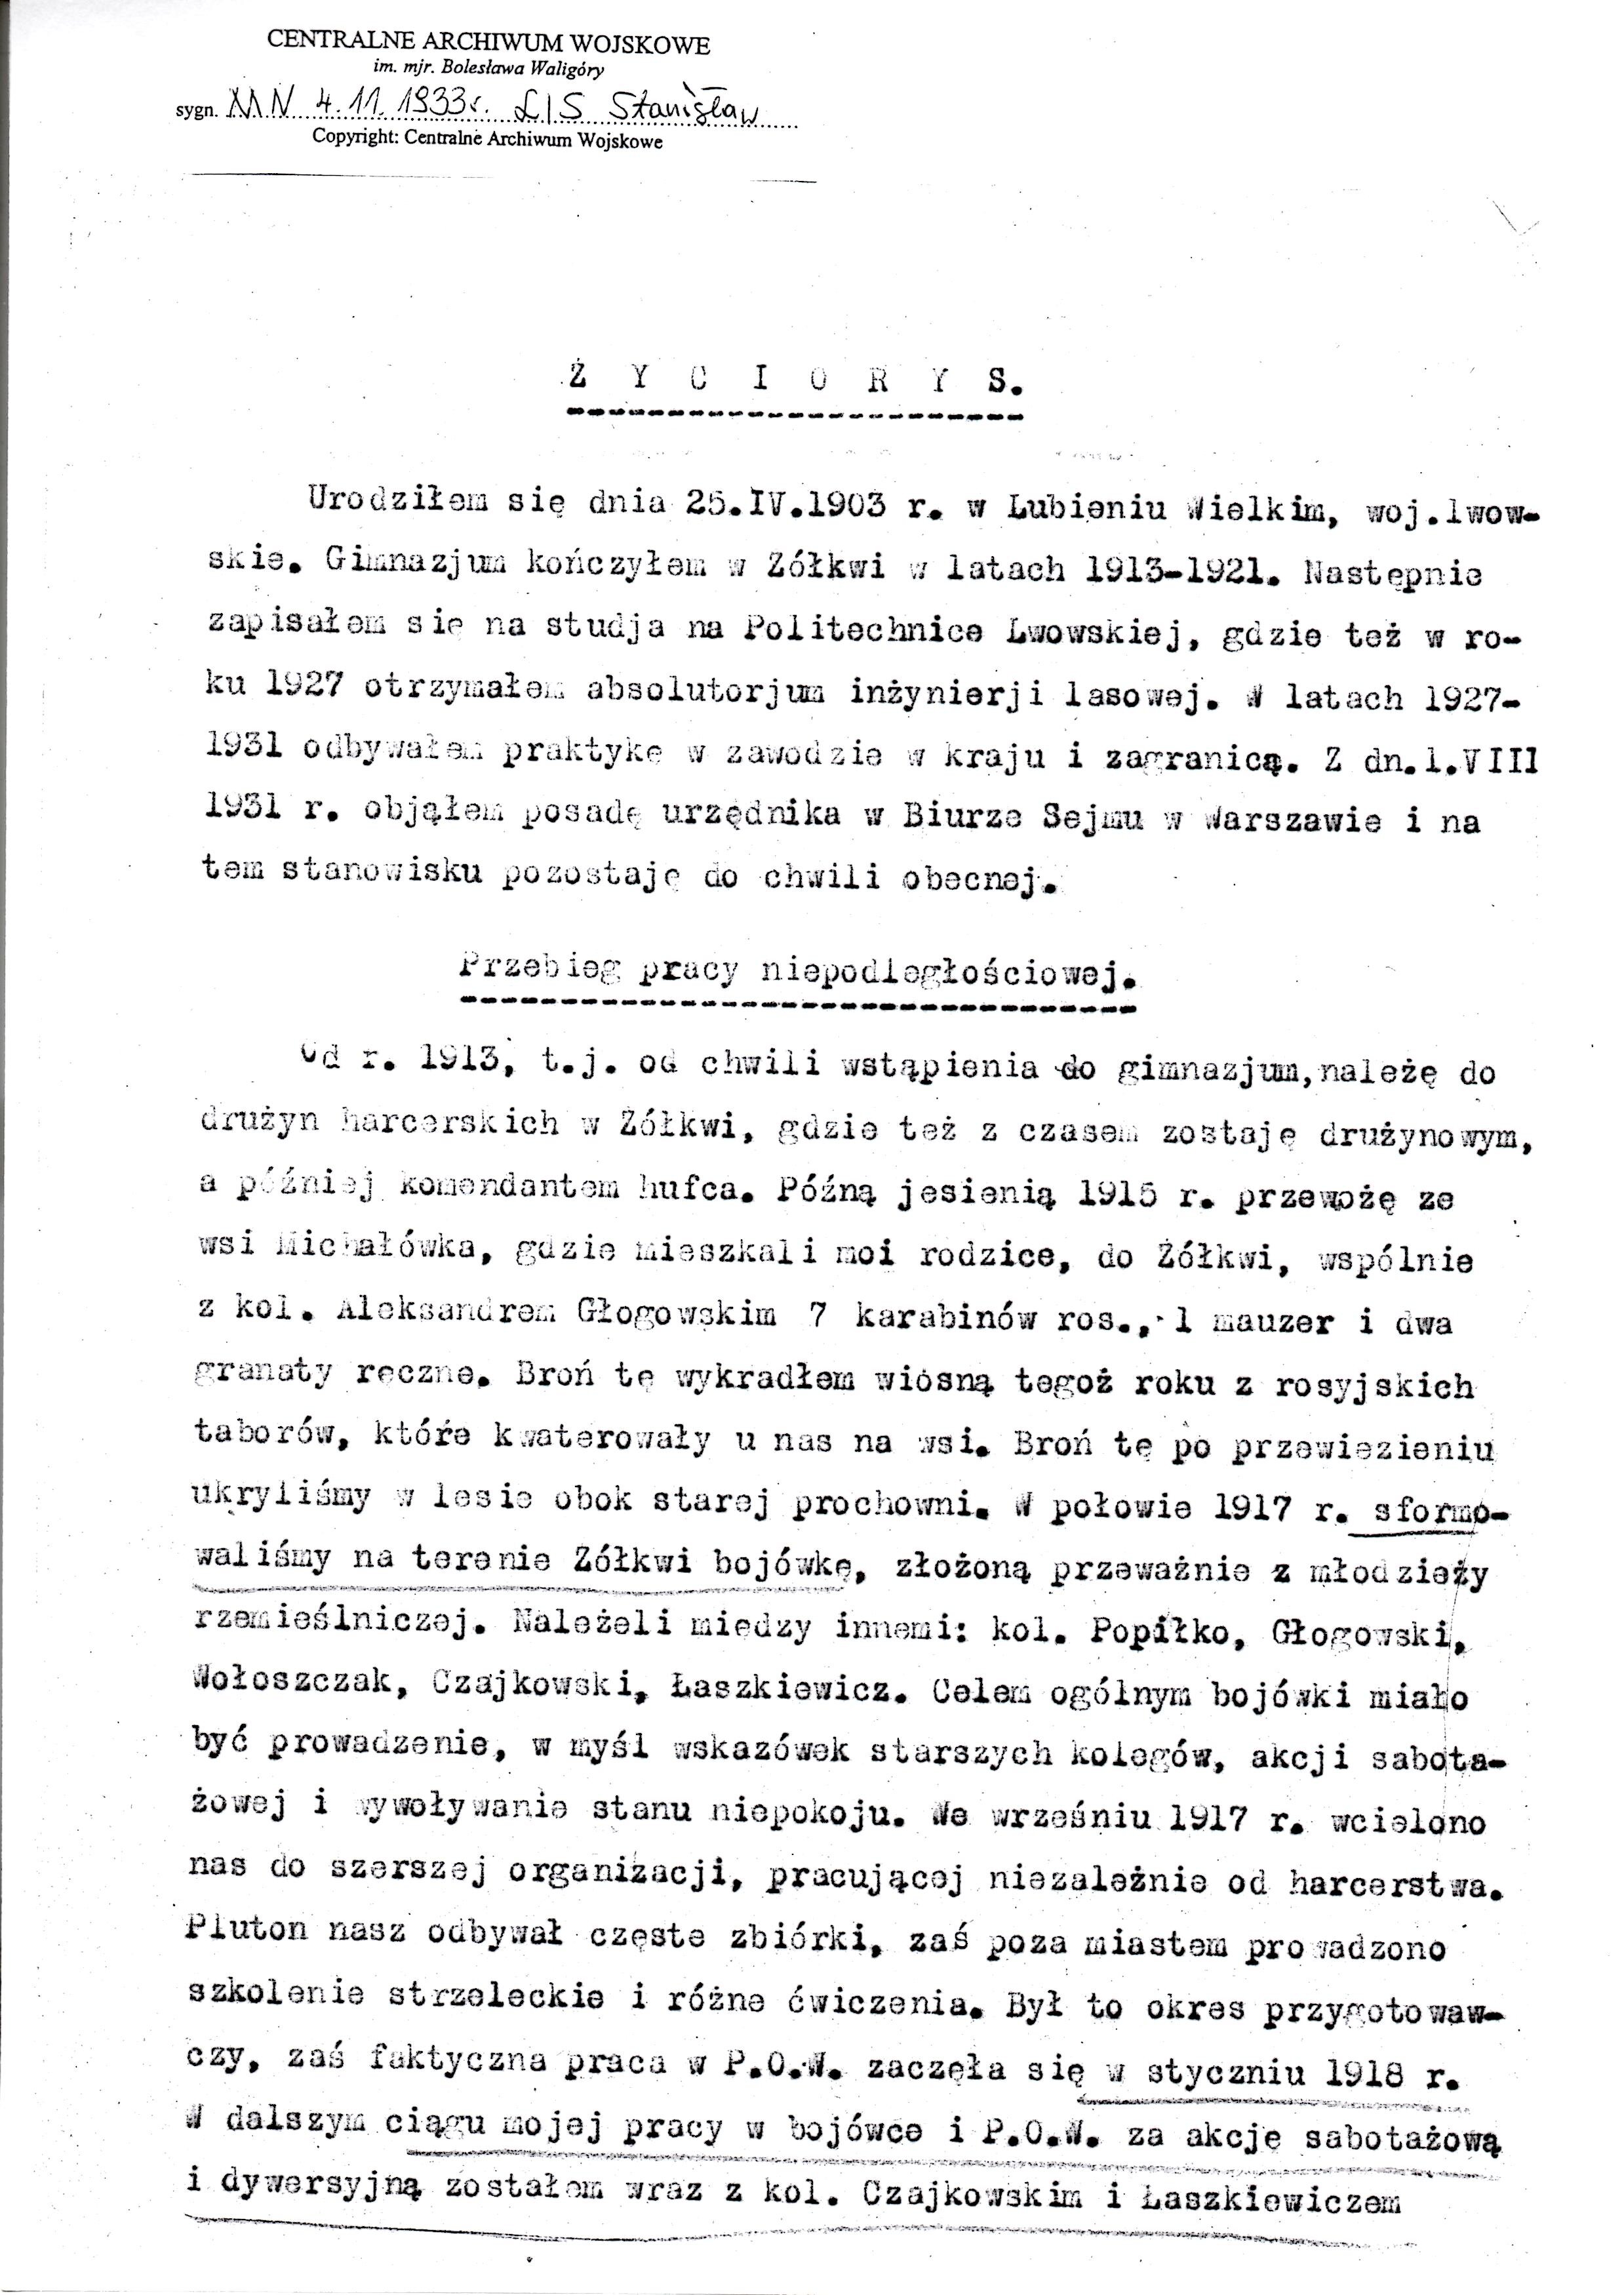 Stanislaw Lis CV 1933 page 1 ZYCIORYSY.jpg